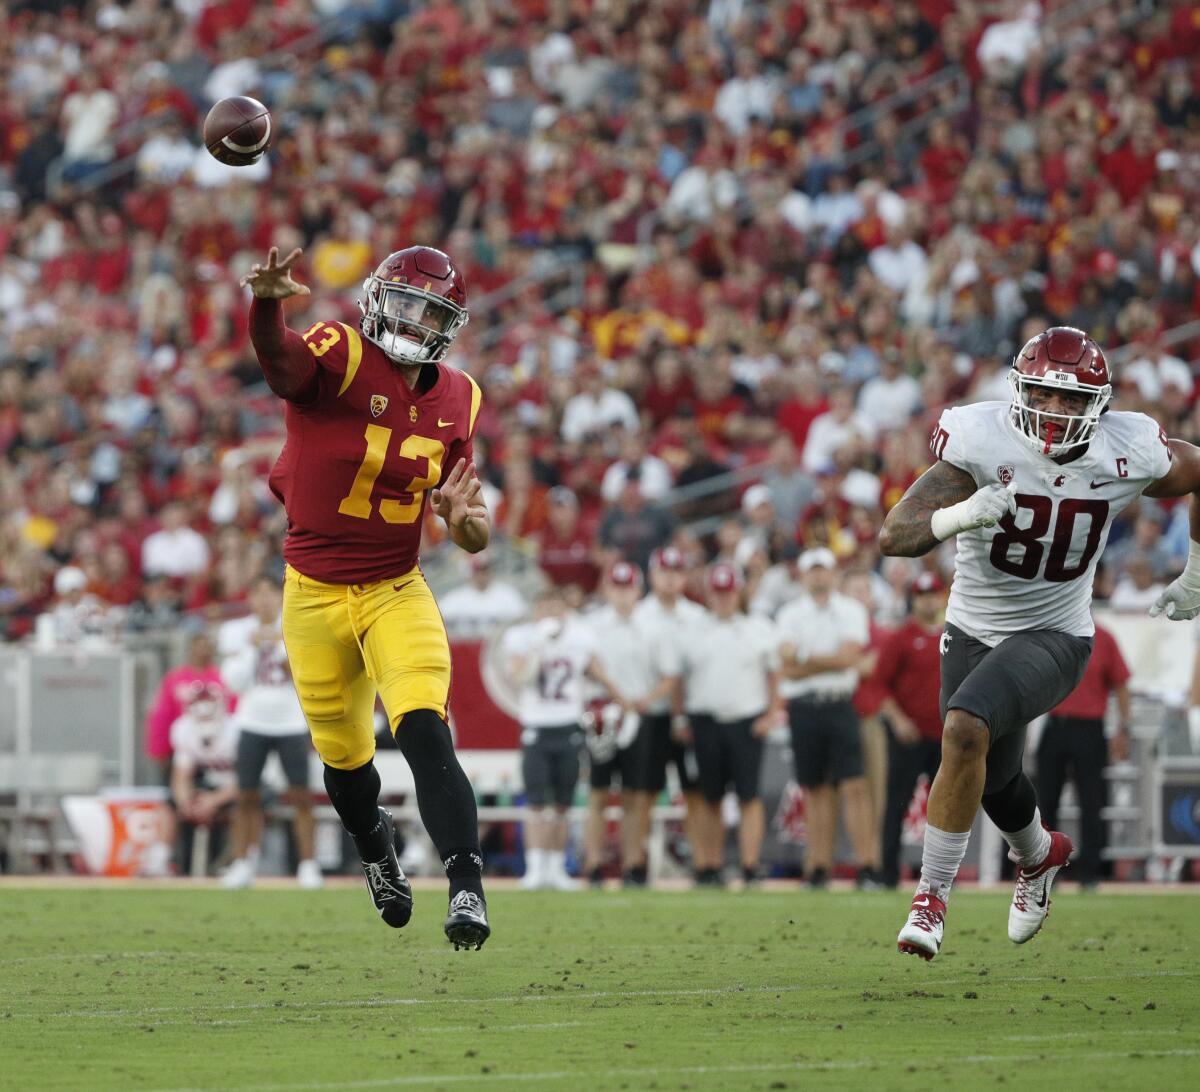 USC quarterback Caleb Williams throws on the run during a 30-14 win over Washington State.